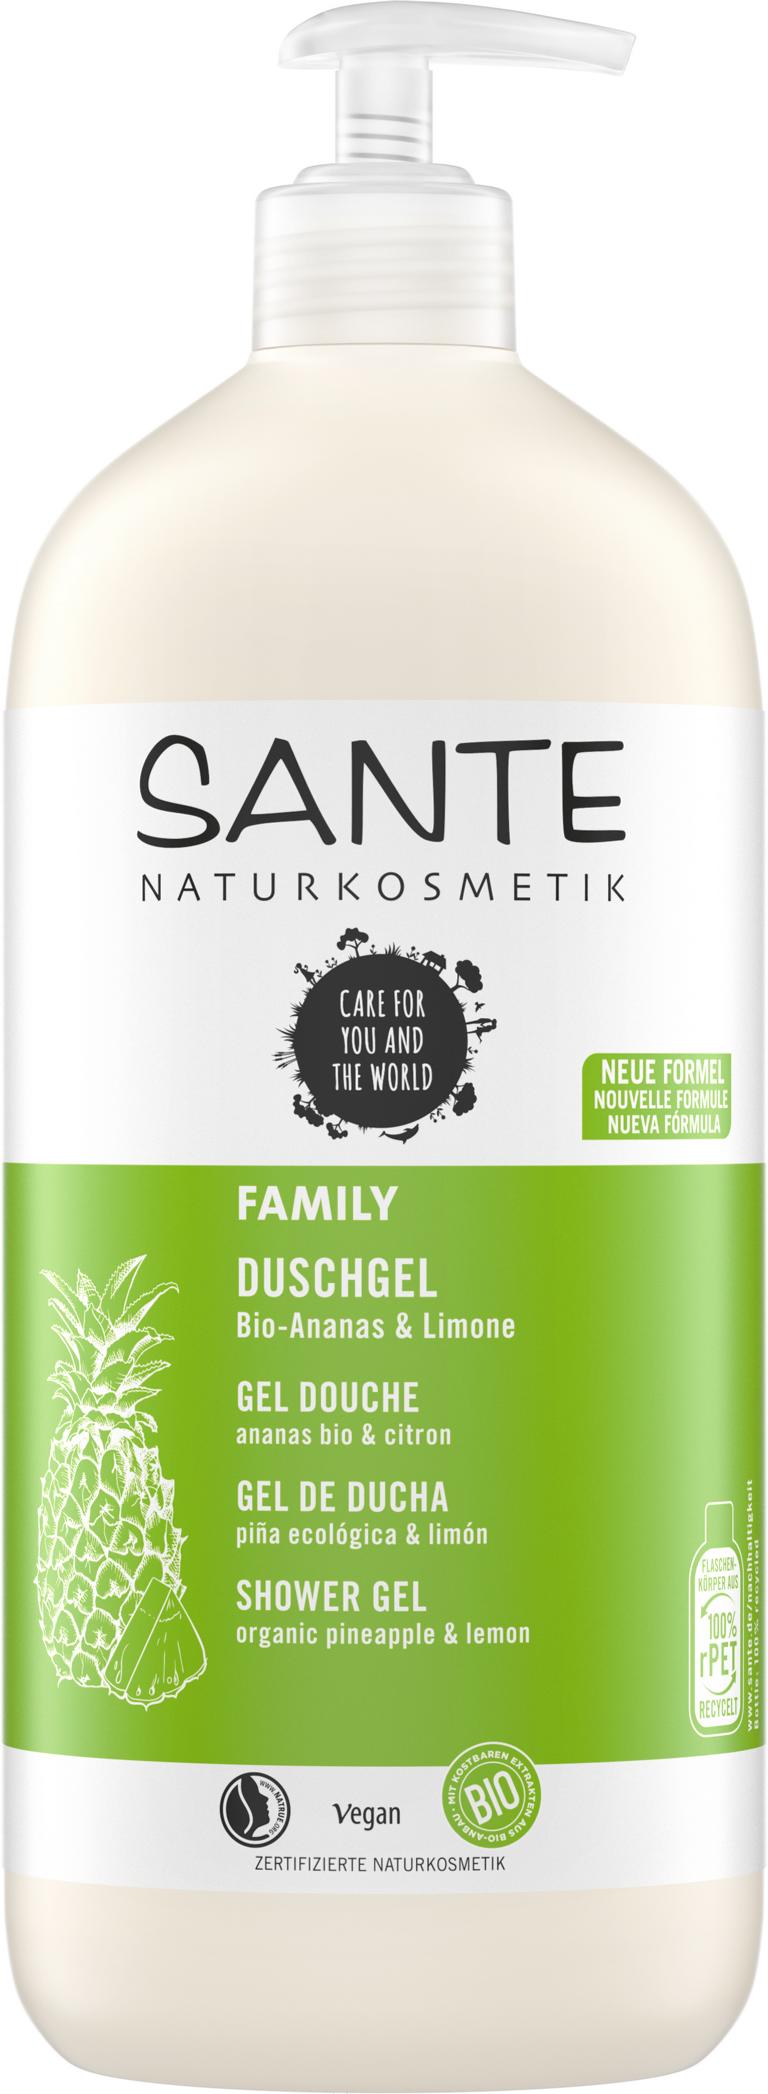 Sante FAMILY Duschgel Bio-Ananas & Limone 950ml 950 ml